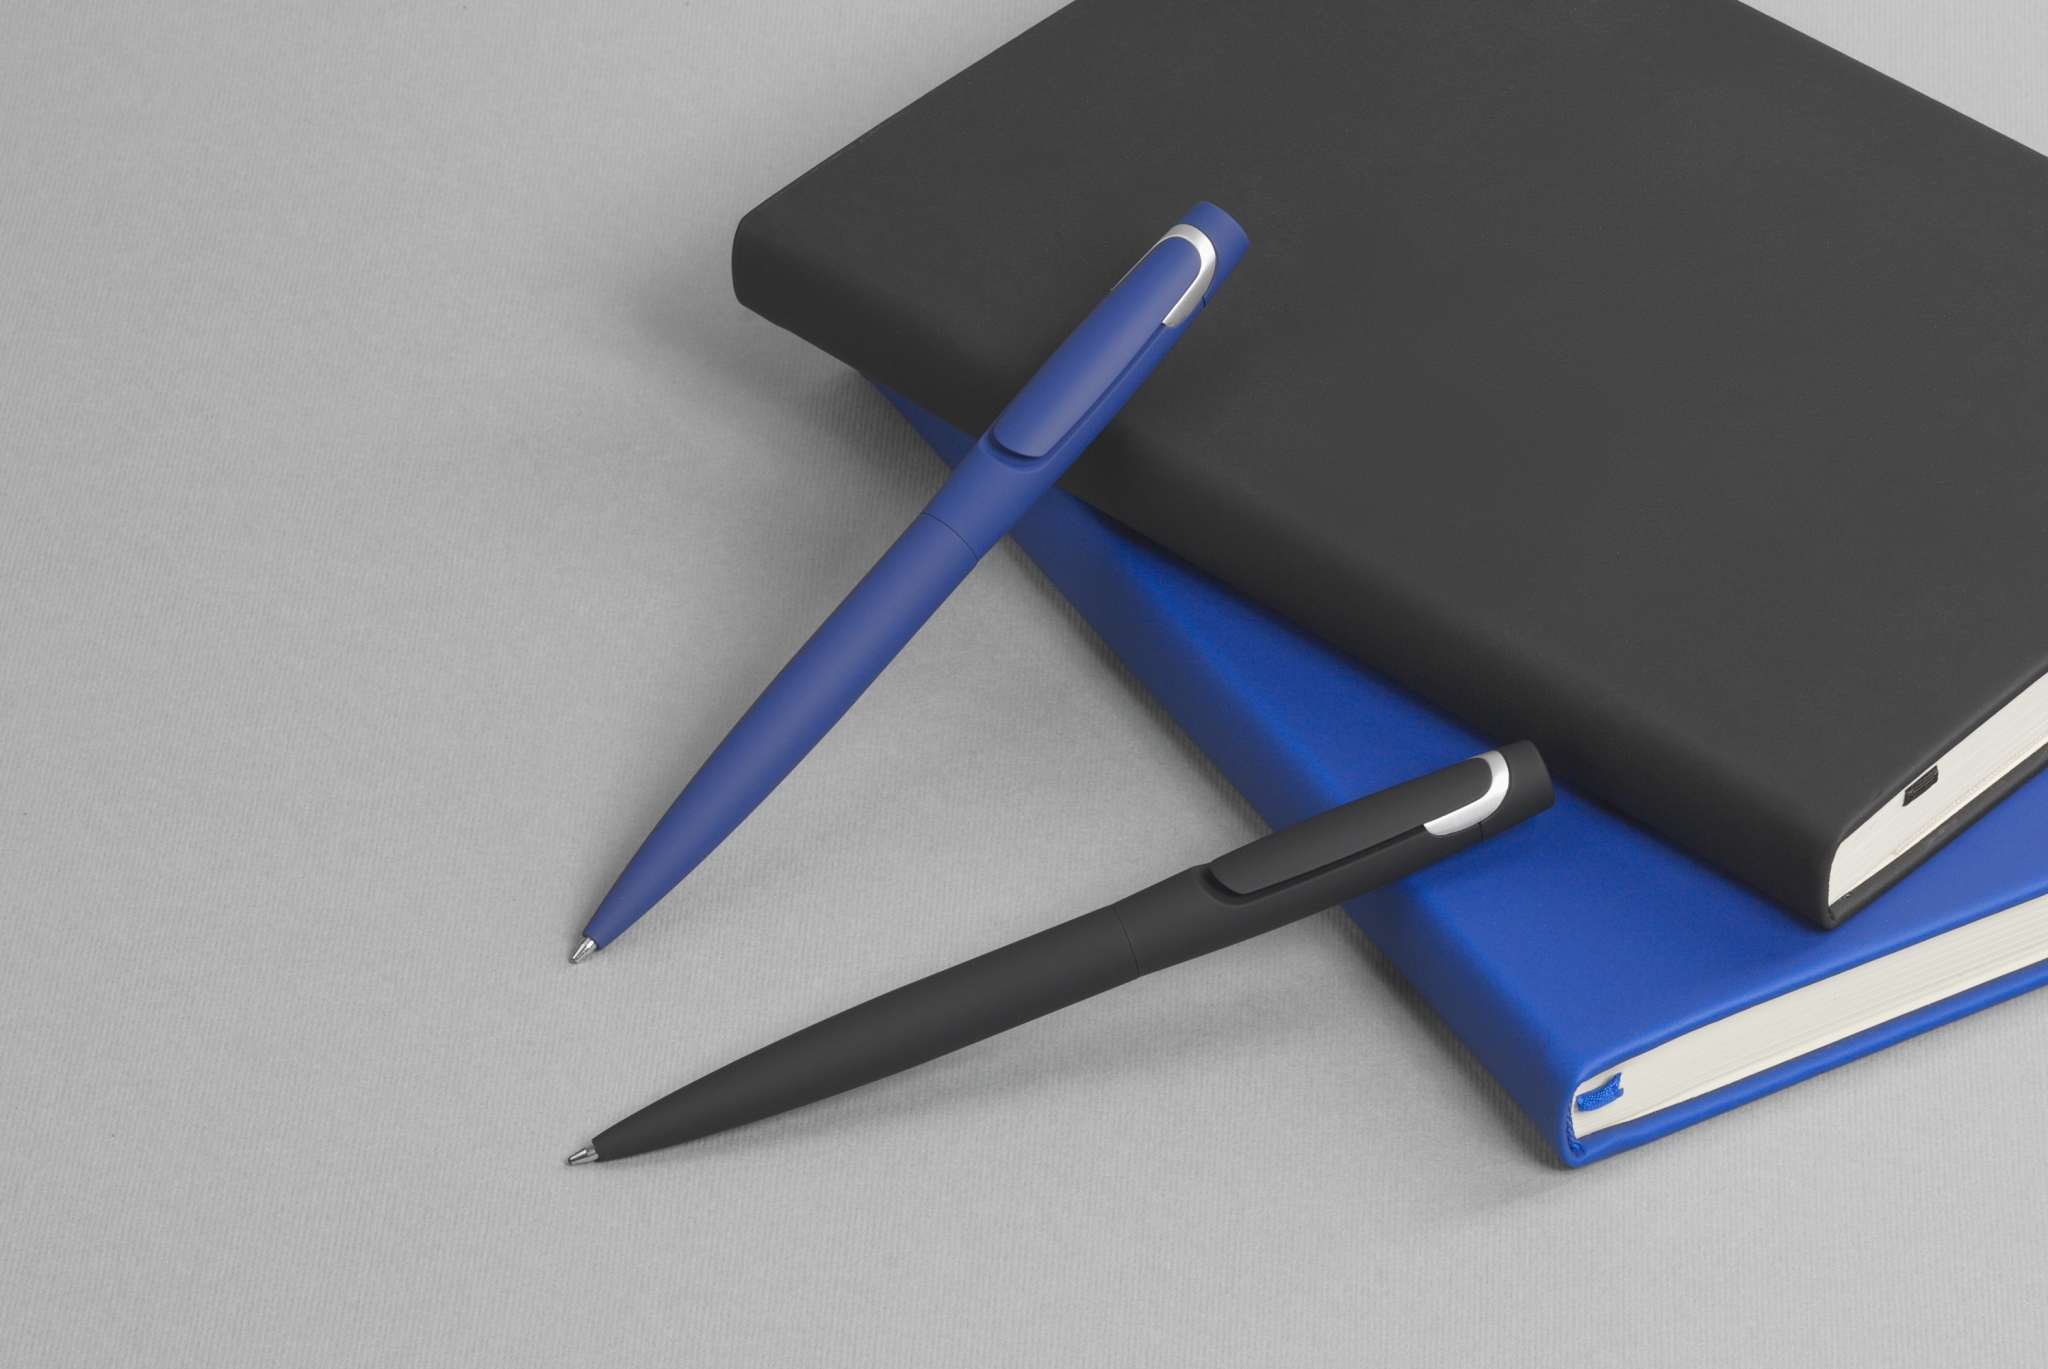 Ручка шариковая "Saturn" покрытие soft touch, синий, металл/пластик/soft touch